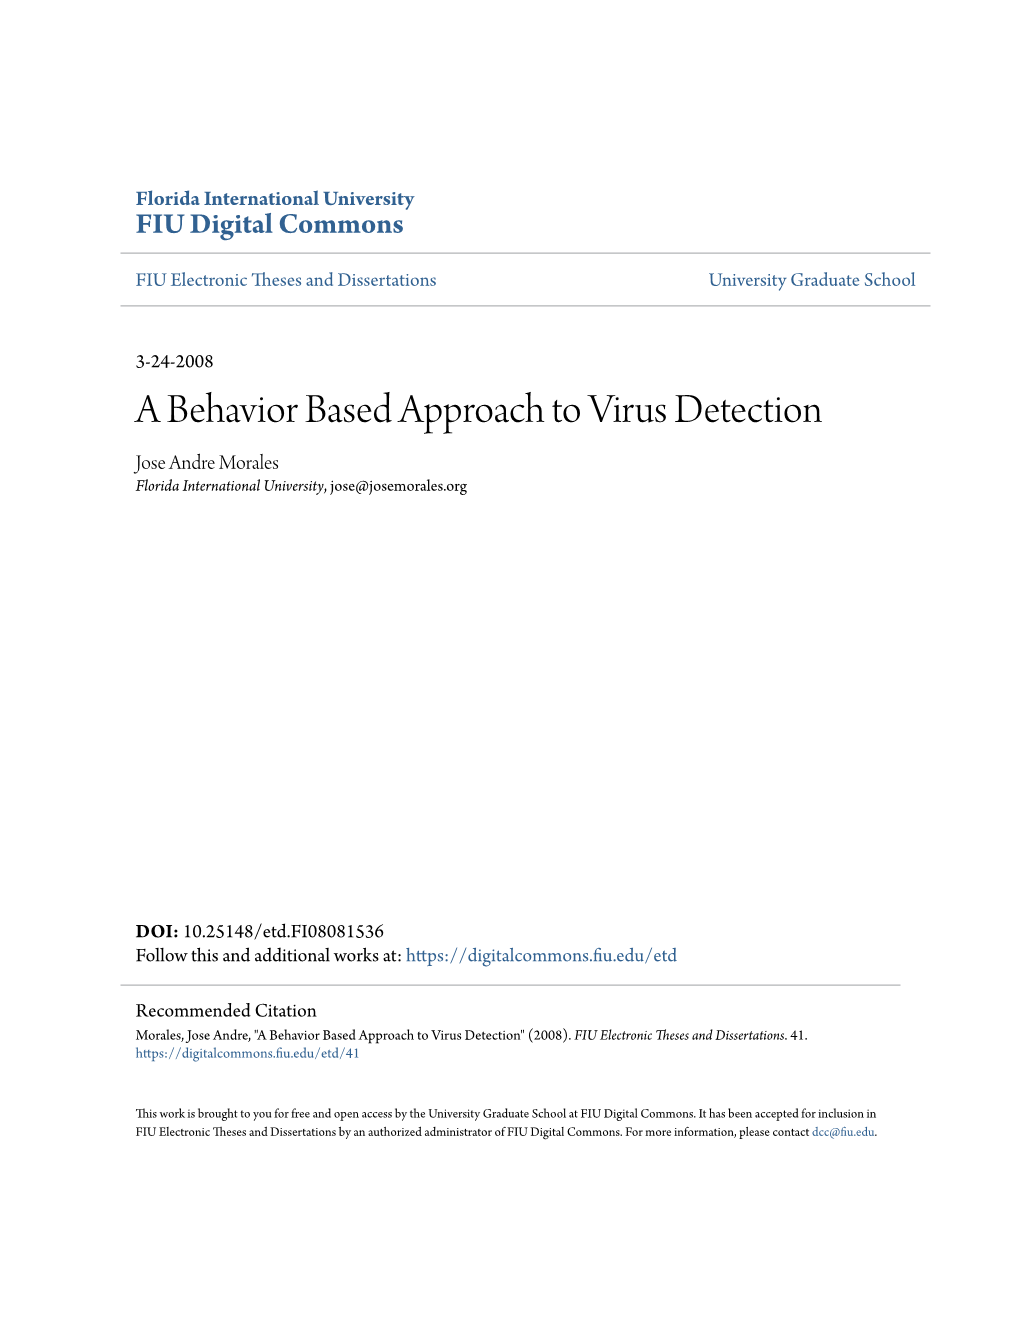 A Behavior Based Approach to Virus Detection Jose Andre Morales Florida International University, Jose@Josemorales.Org